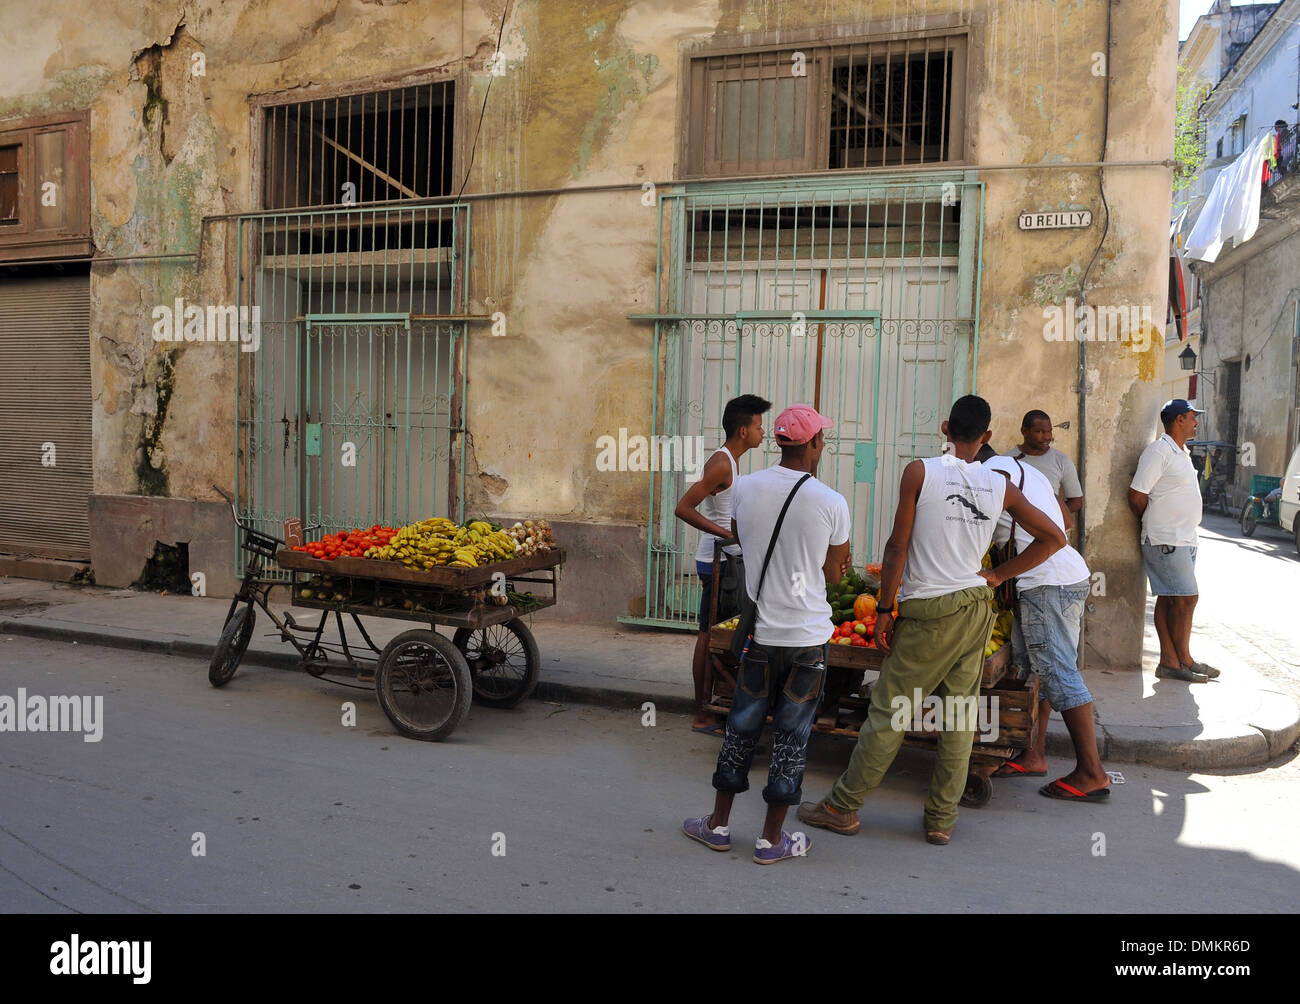 Street traders on the street of Havana, Cuba Stock Photo